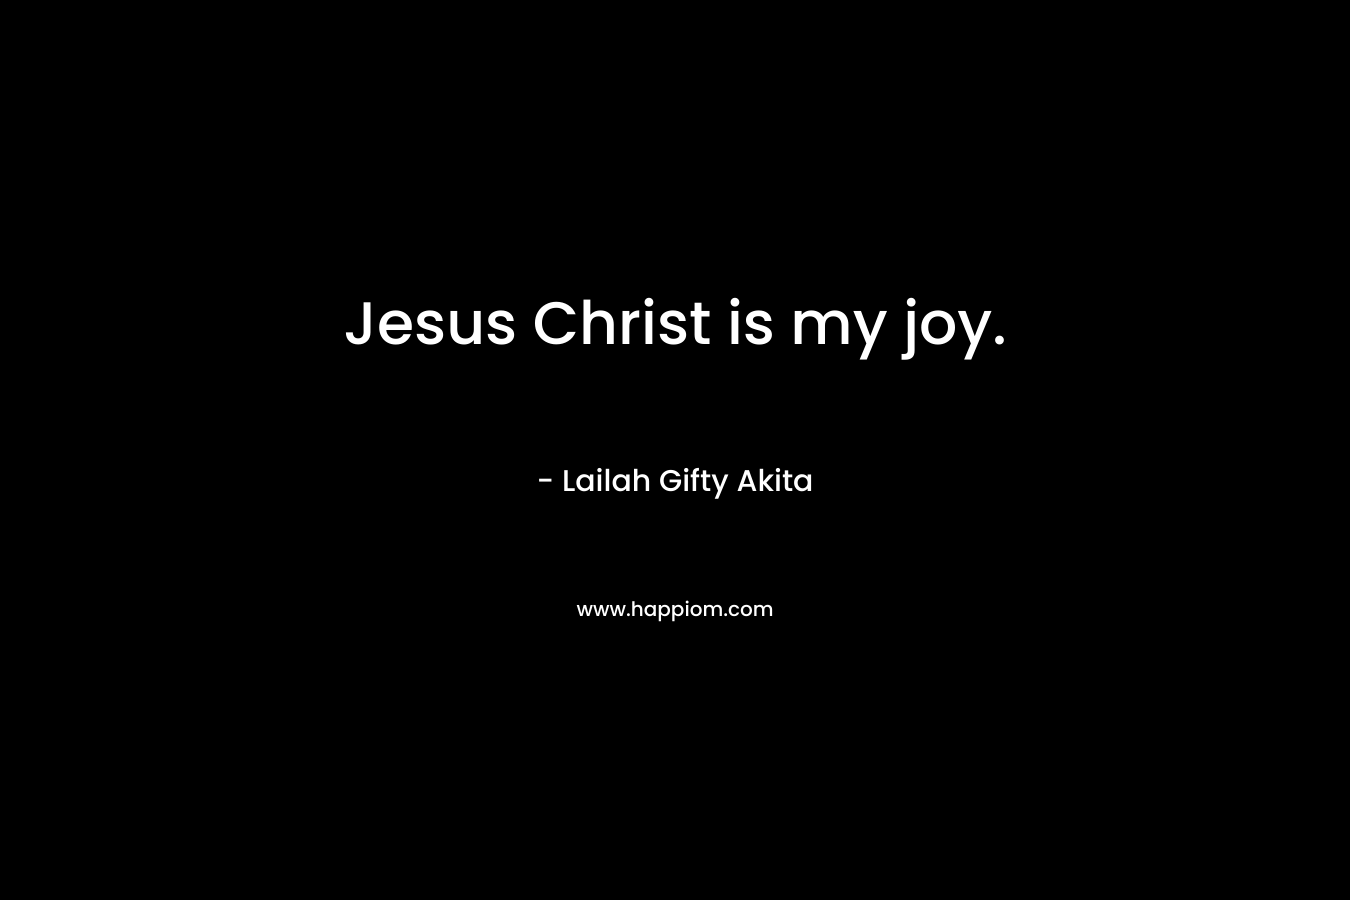 Jesus Christ is my joy.